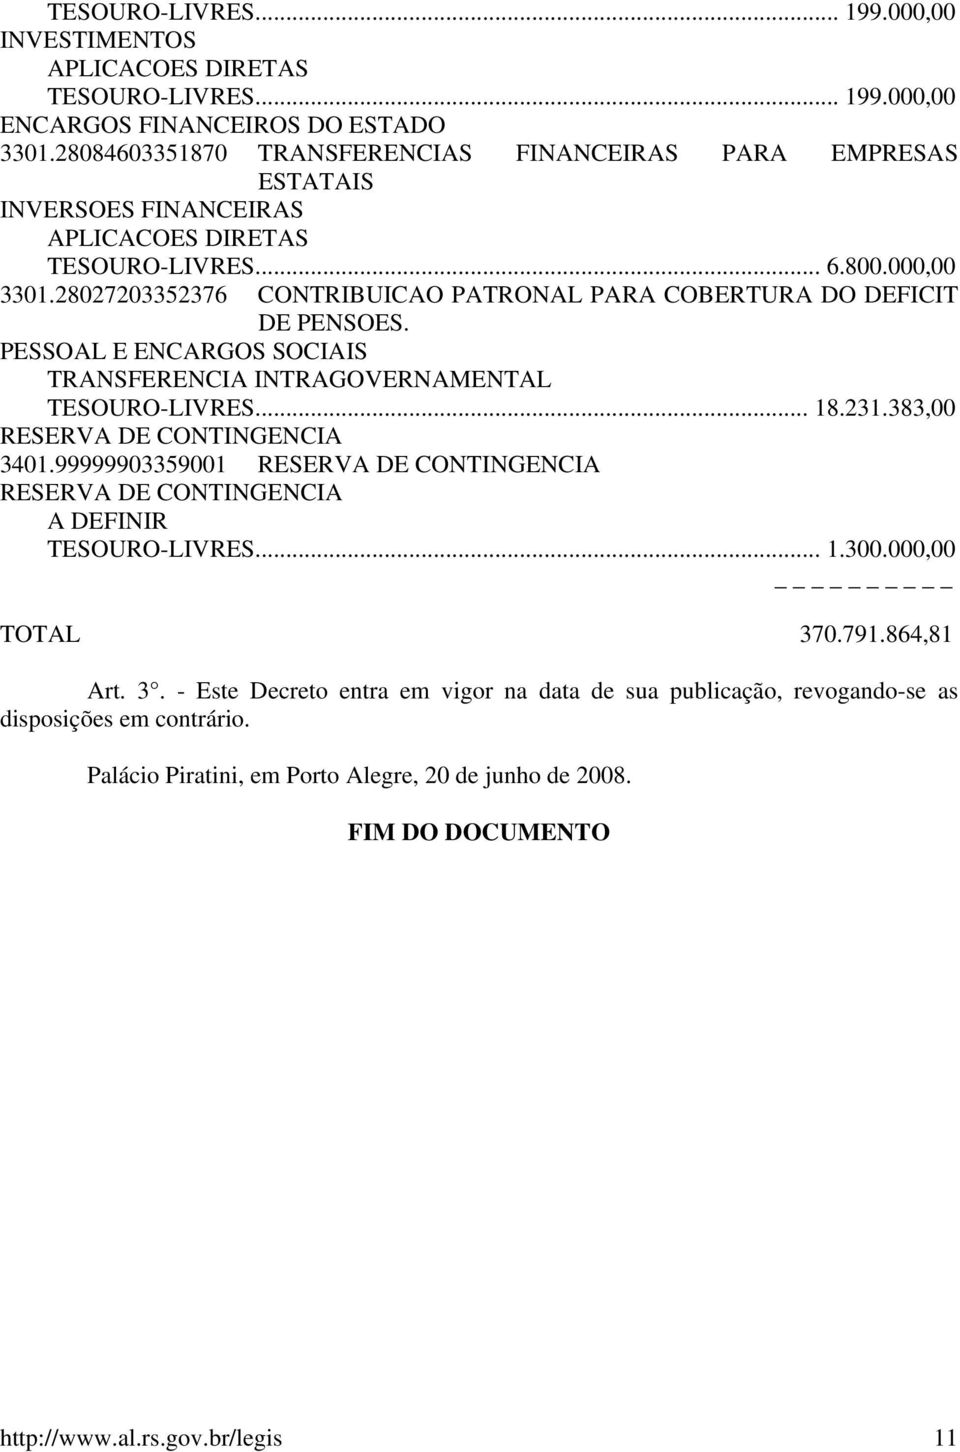 28027203352376 CONTRIBUICAO PATRONAL PARA COBERTURA DO DEFICIT DE PENSOES. TRANSFERENCIA INTRAGOVERNAMENTAL TESOURO-LIVRES... 18.231.383,00 RESERVA DE CONTINGENCIA 3401.